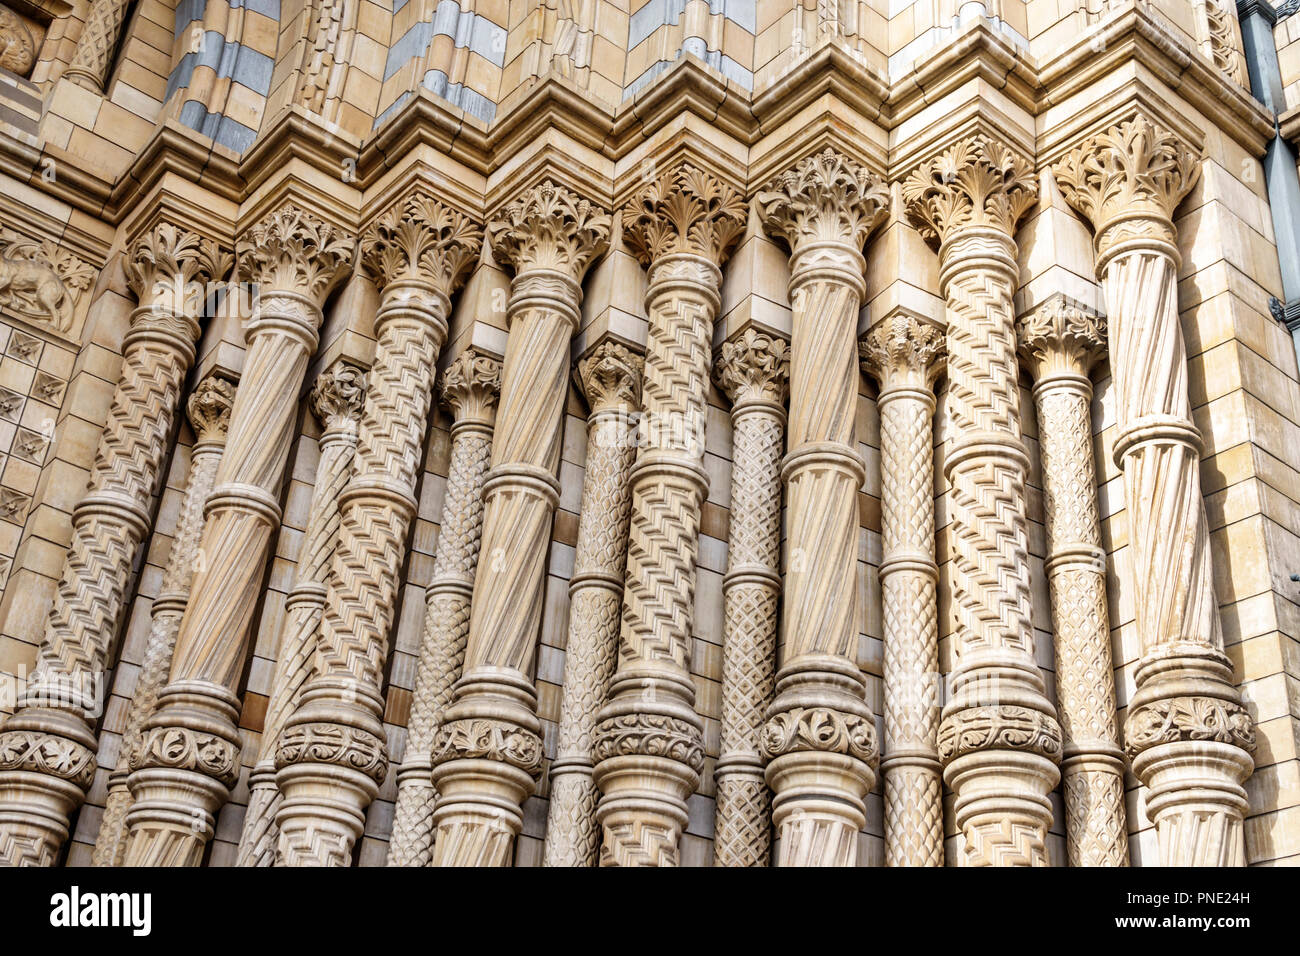 London England,UK,Kensington,Natural History Museum,exterior,Romanesque architecture,facade detail,ornate columns pillars,Alfred Waterhouse,UK GB Engl Stock Photo